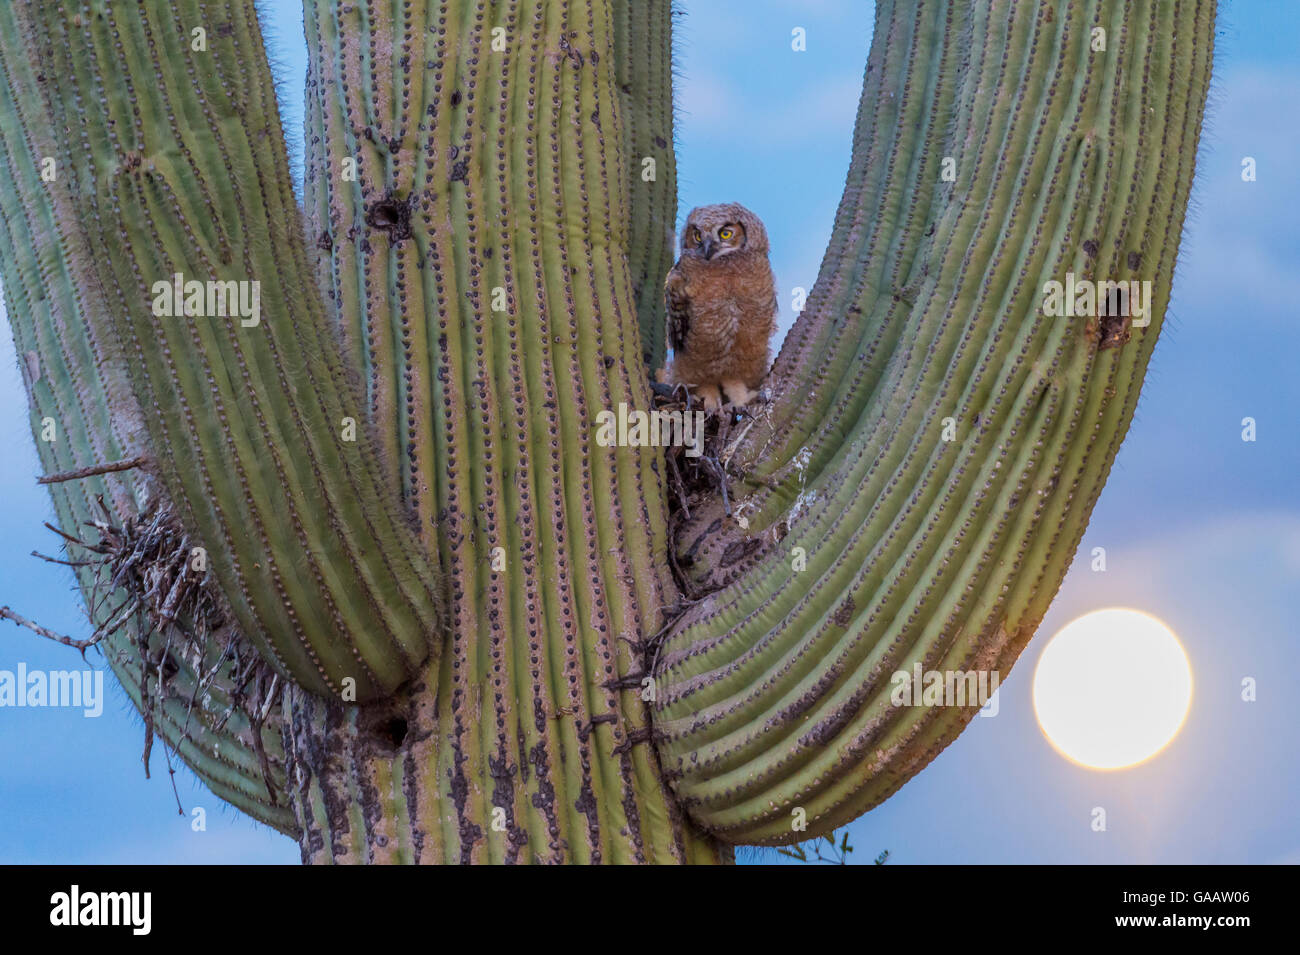 Great horned owl (Bubo virginianus) chick nesting in Saguaro cactus (Carnegiea gigantea), Santa Catalina Mountains, Arizona, USA, May. Stock Photo